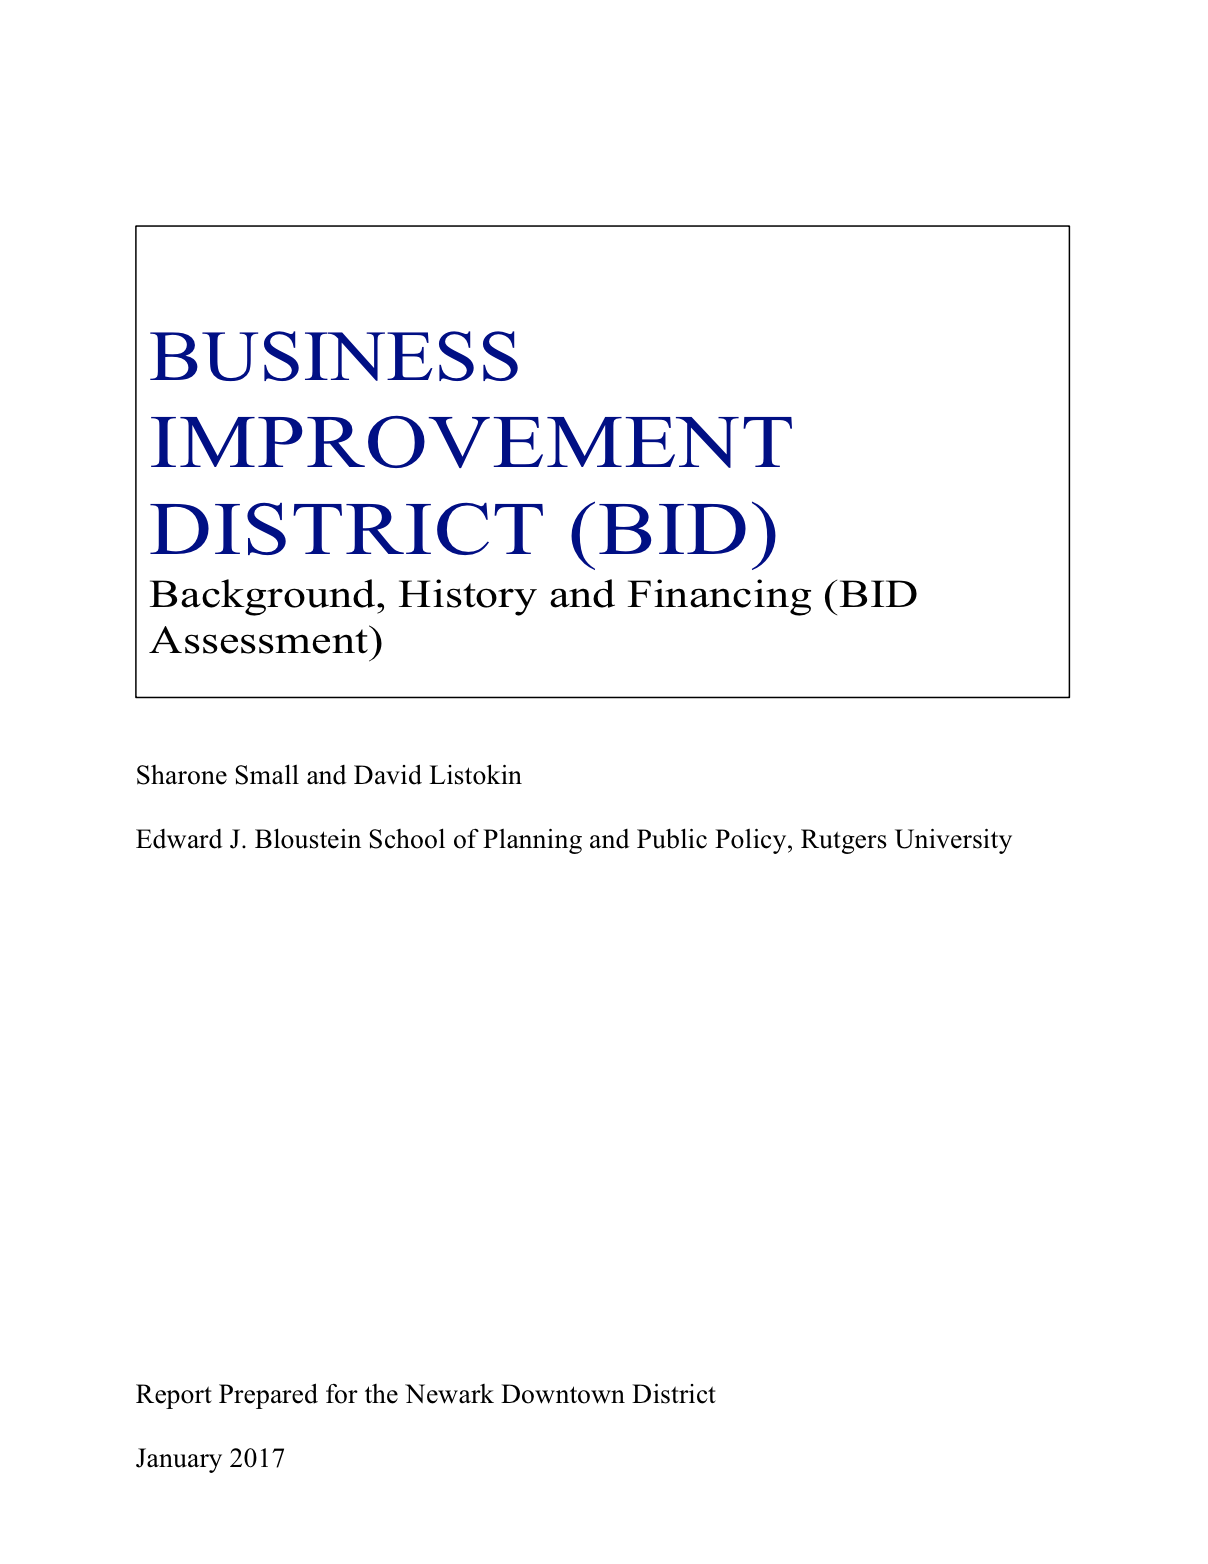 BUSINESS IMPROVEMENT DISTRICT (BID) Background, History and Financing (BID Assessment)